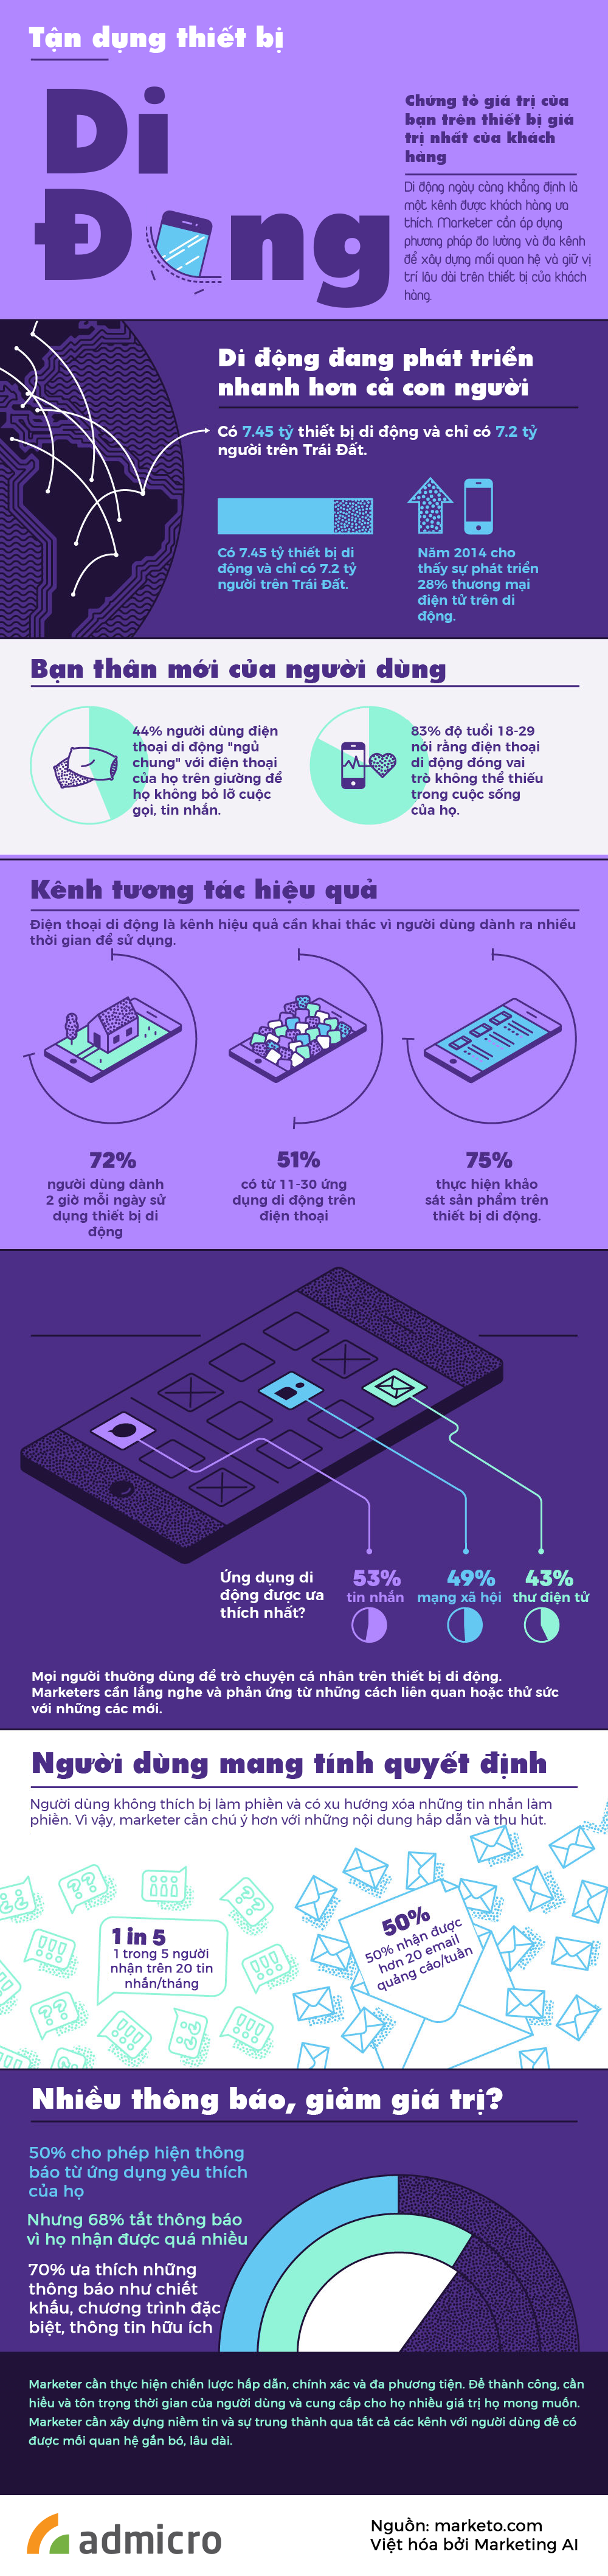 infographic mobile marketing marketingai